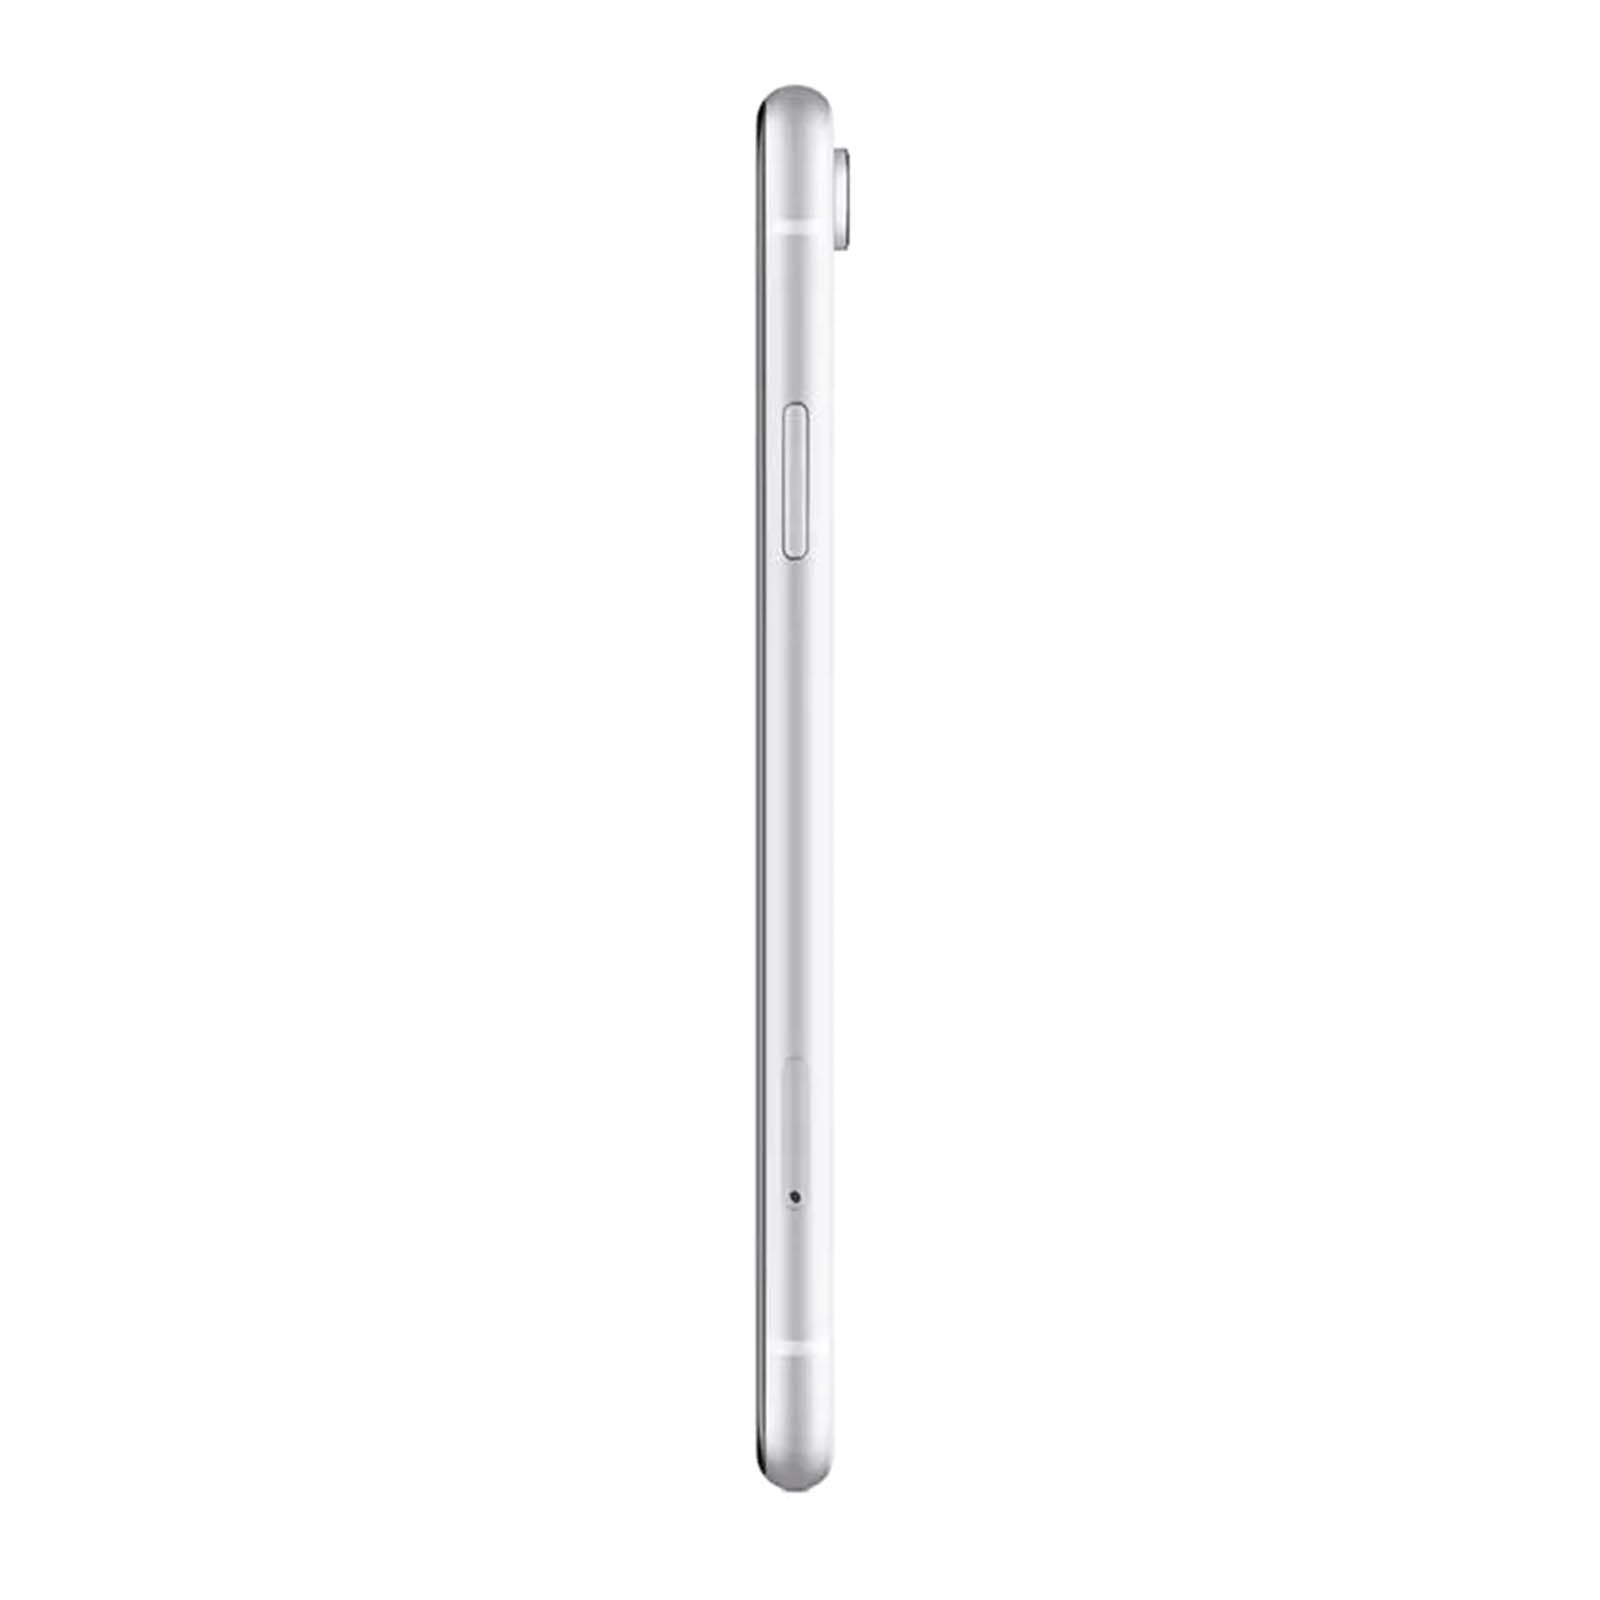 Apple iPhone XR 128GB White Pristine - Unlocked